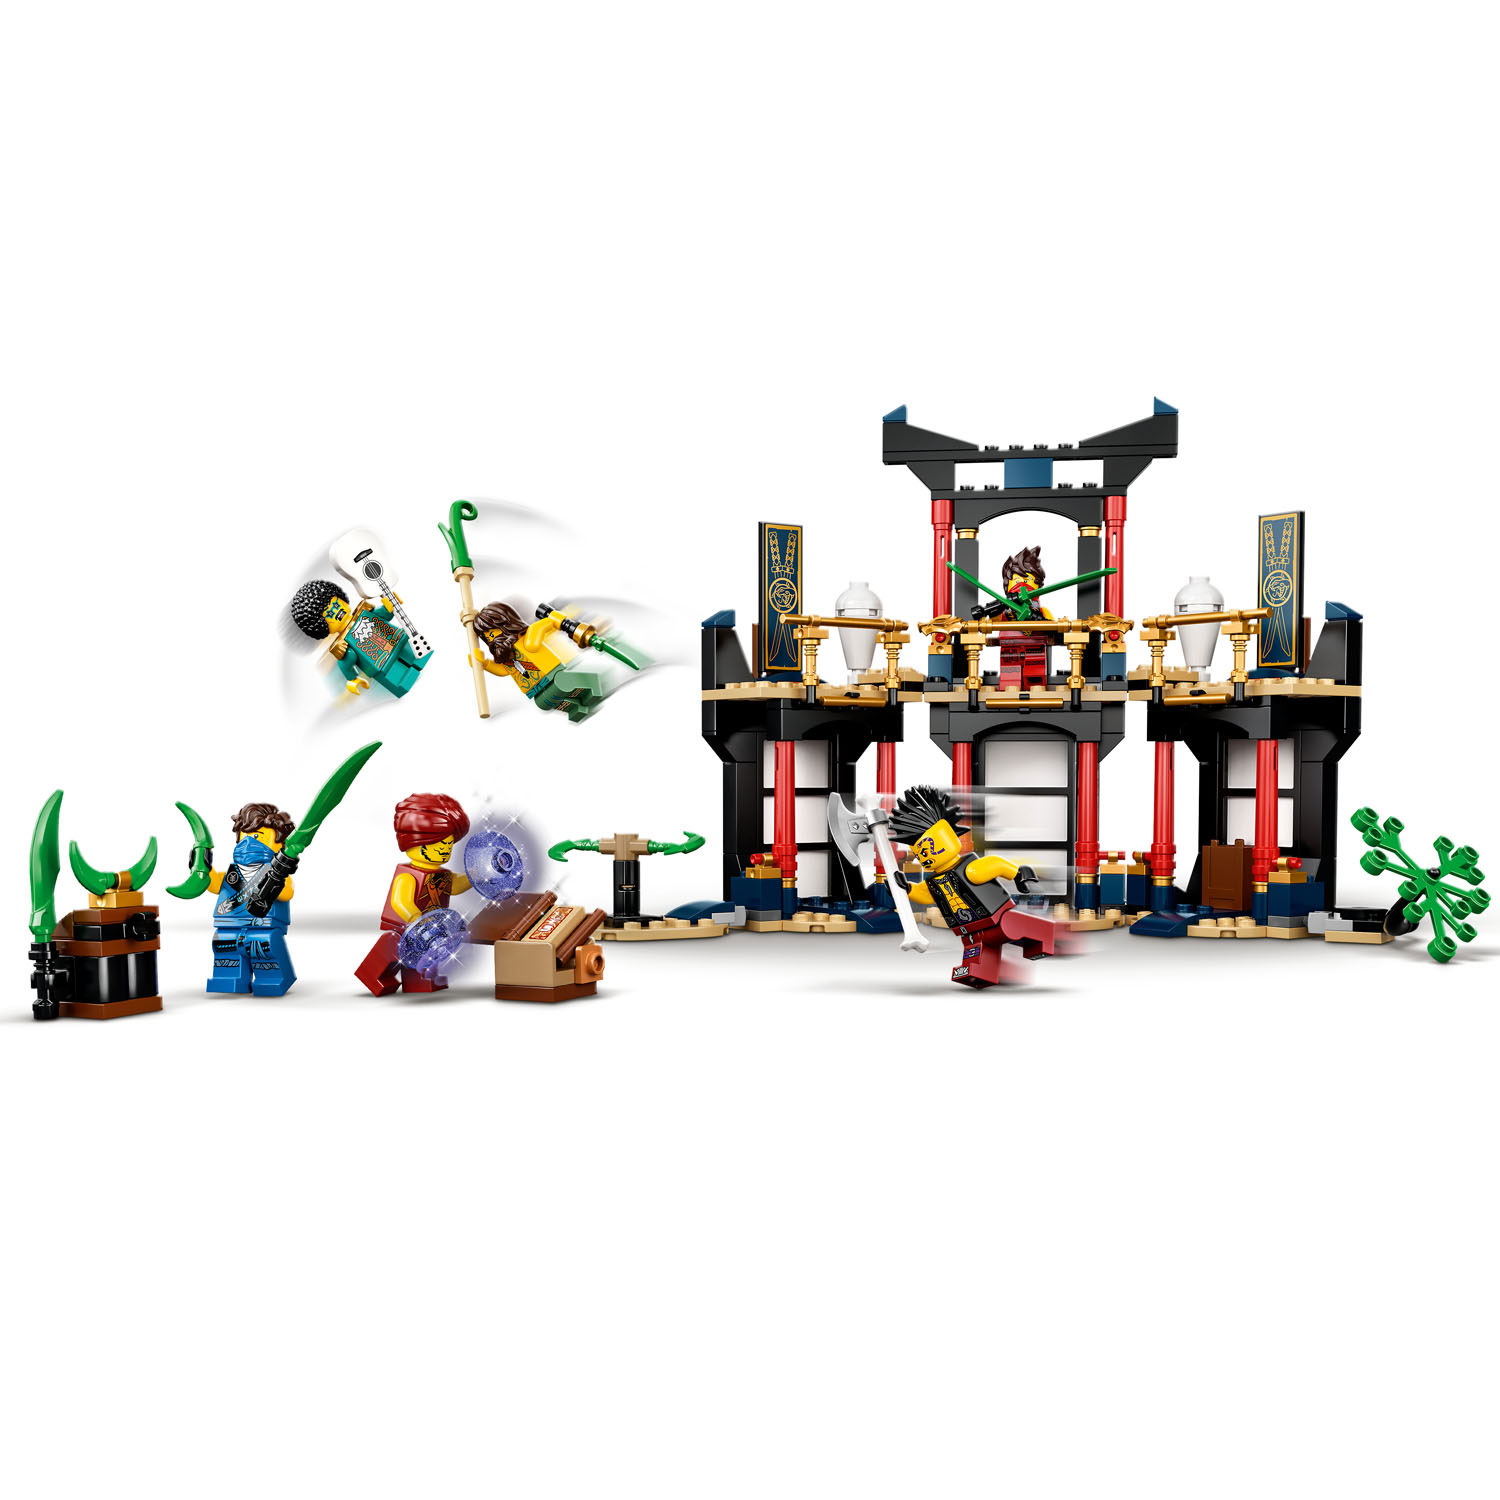 LEGO Ninjago 71735 Turnier der Elemente